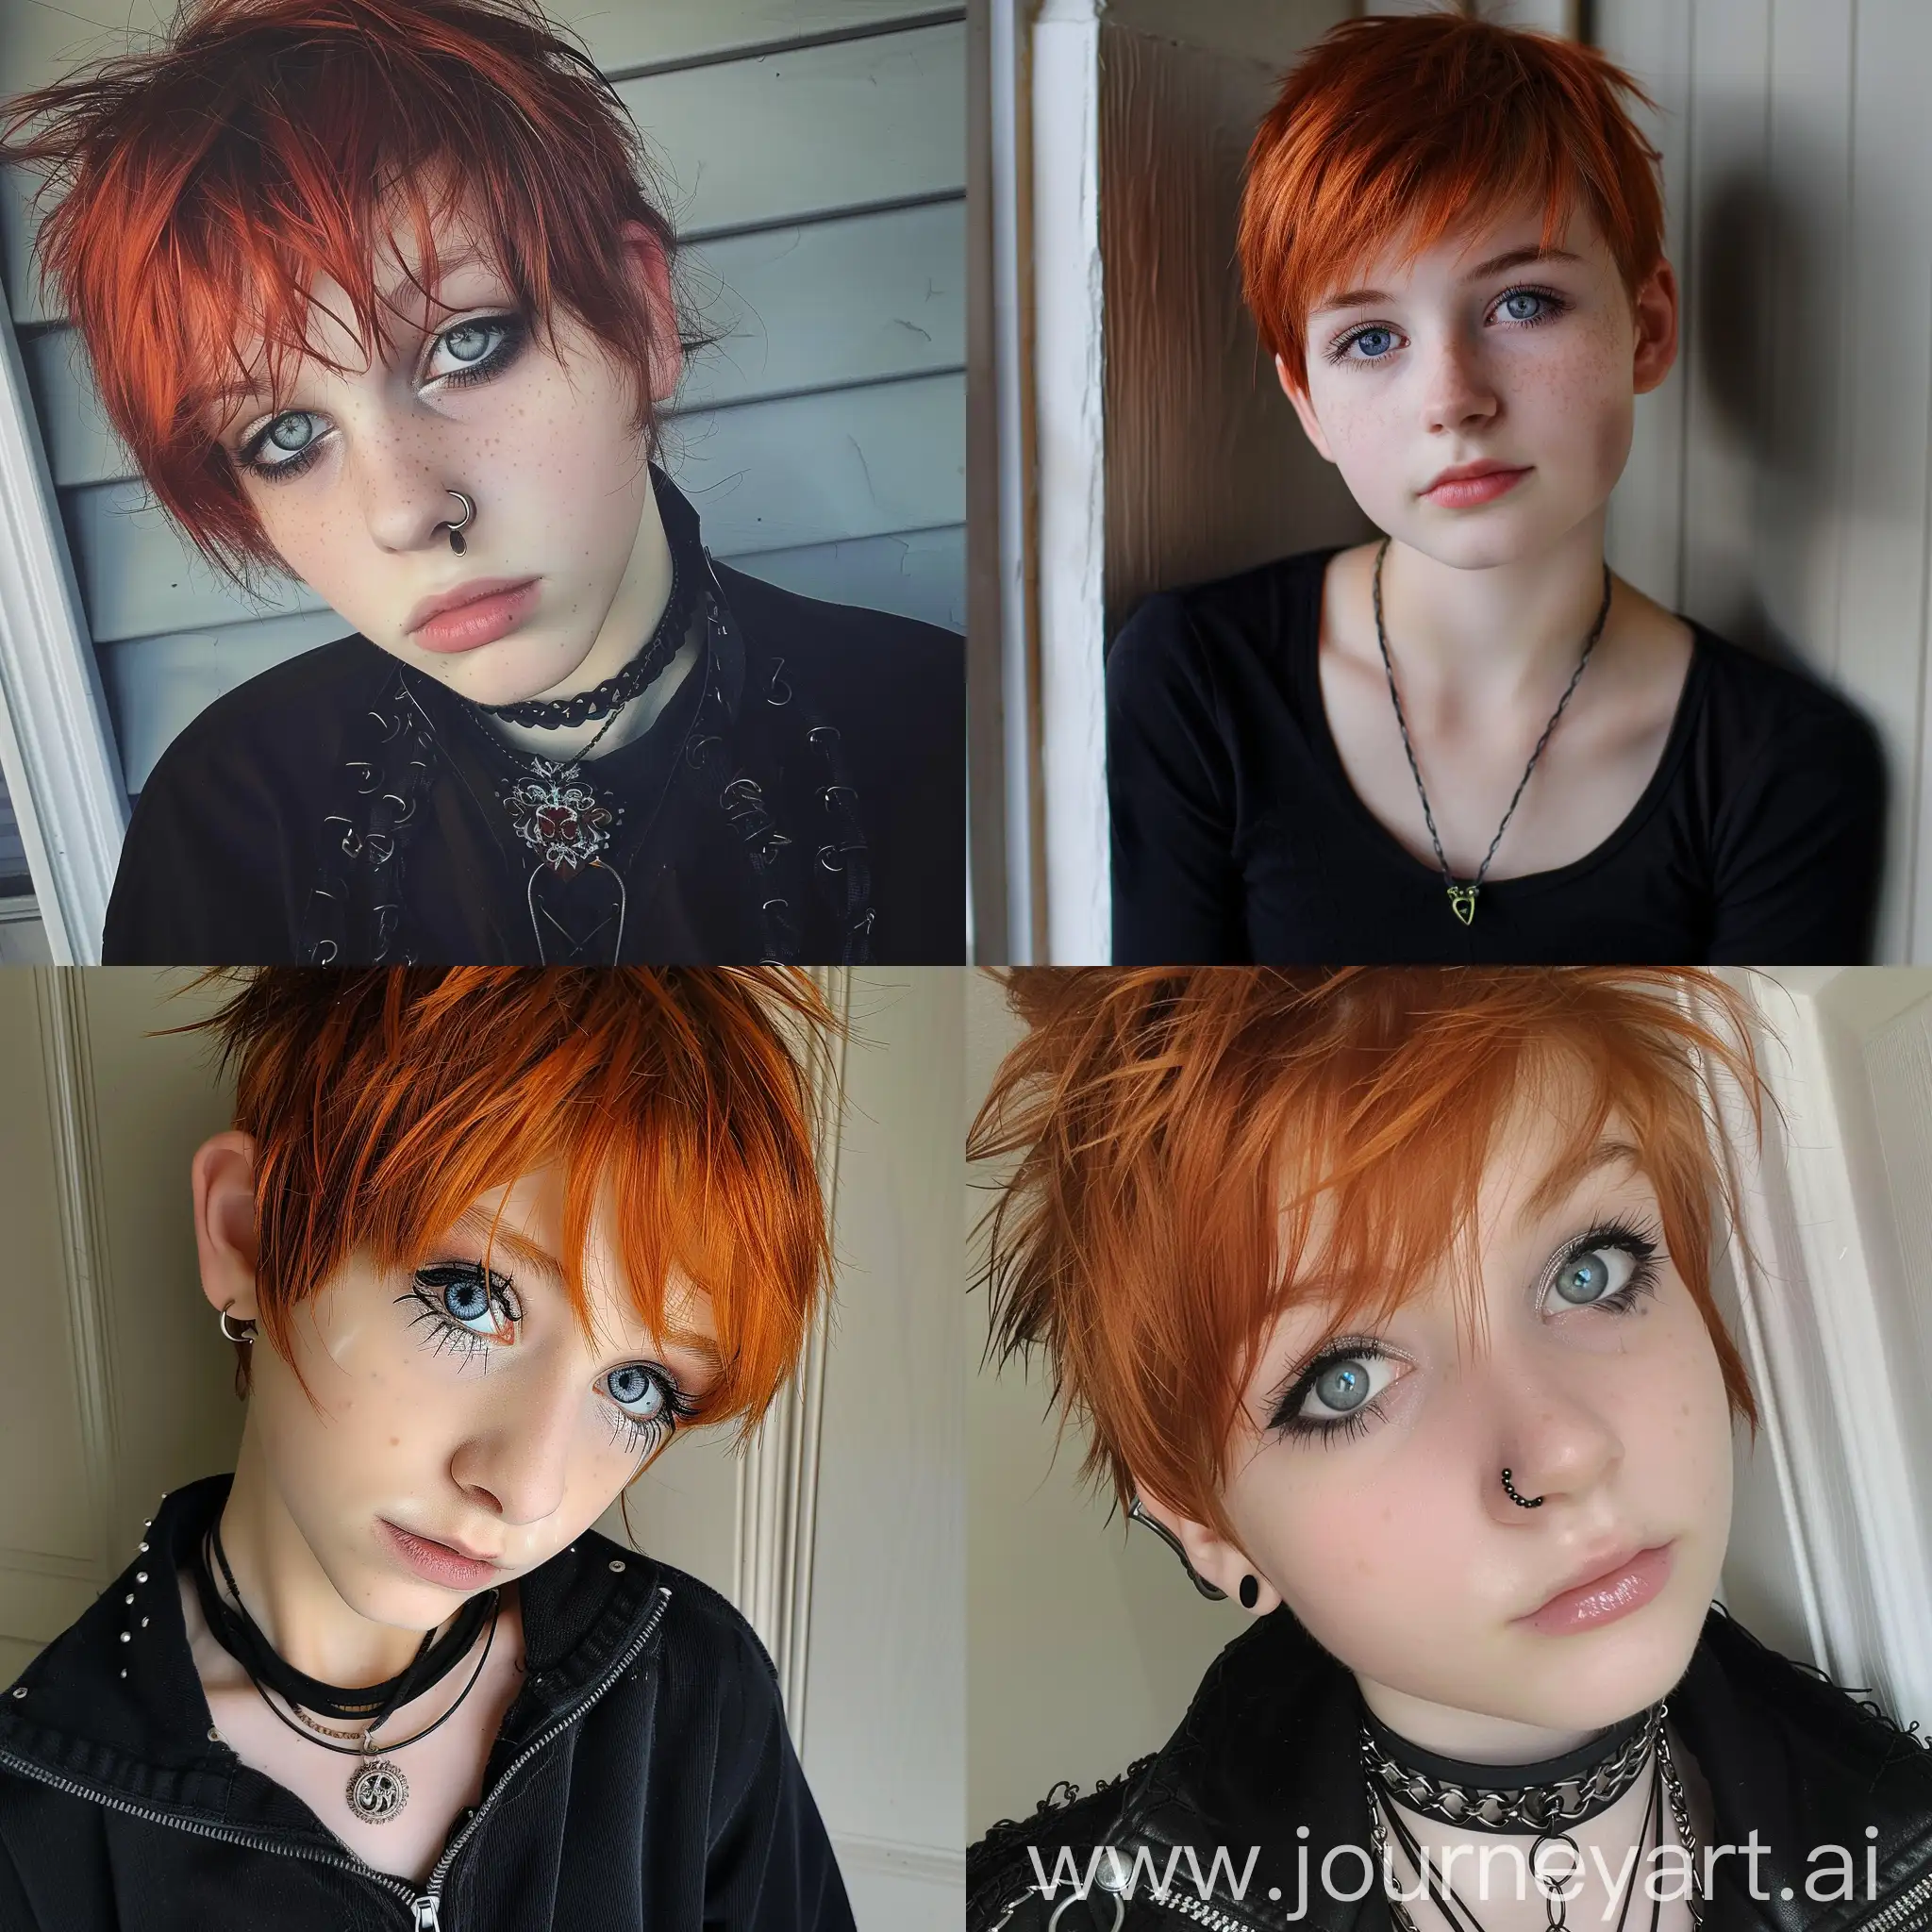 15 year old girl, goth, pixie cut, red hair, icy blue eyes